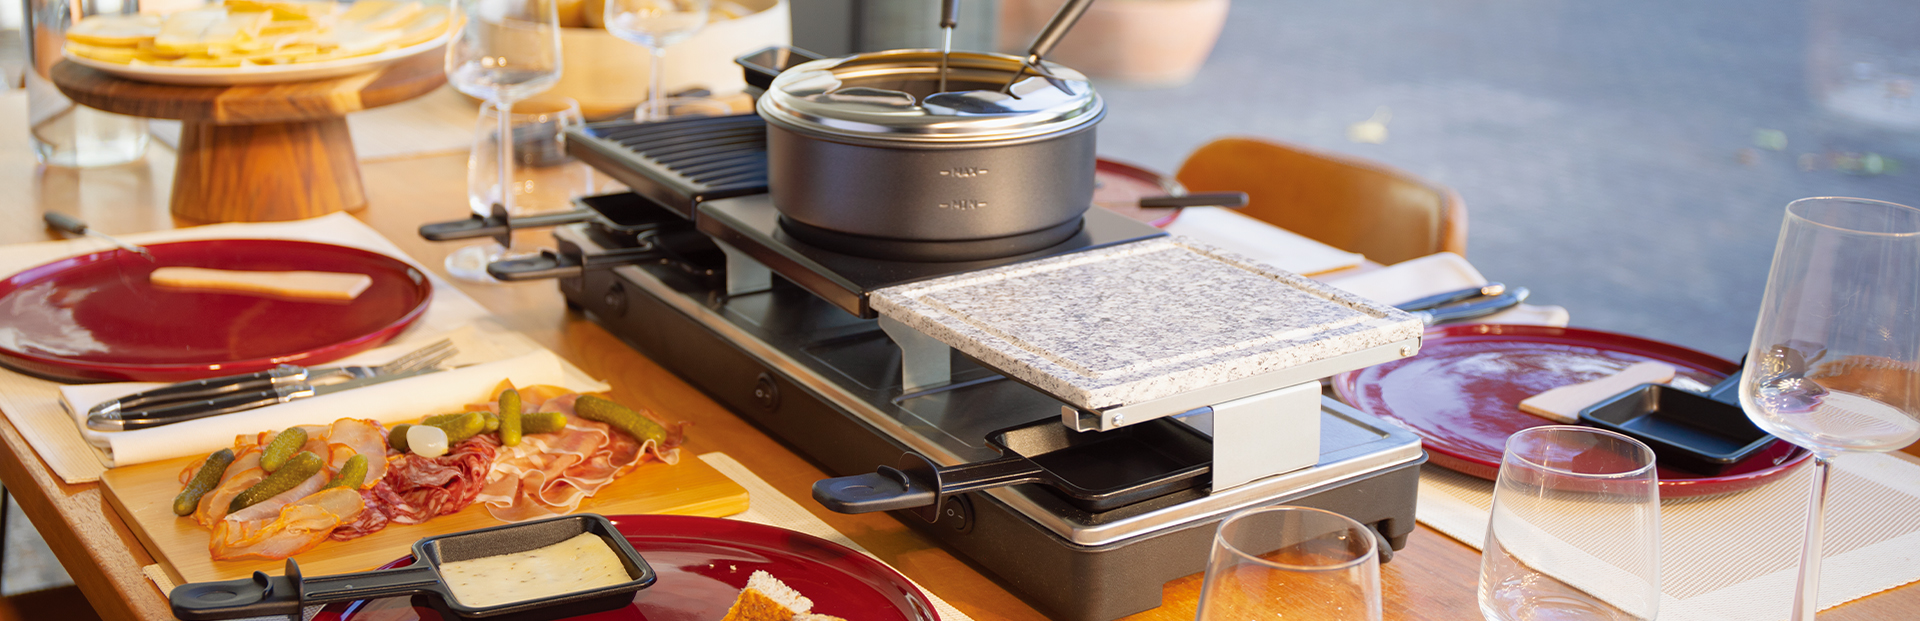 yilian raclette grill + Fondue set